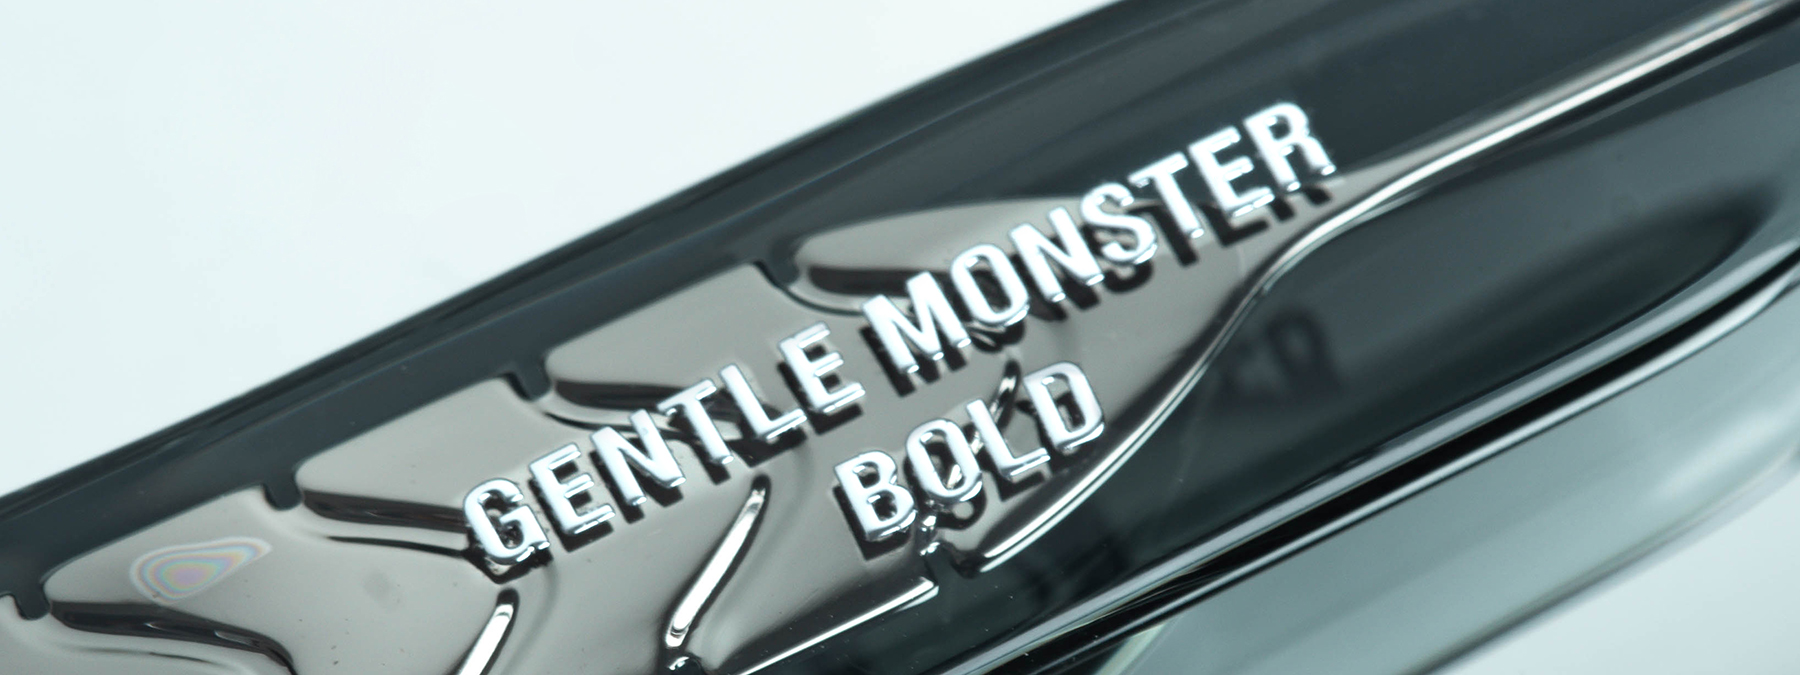 Gentle Monster - Feature Sneaker Boutique